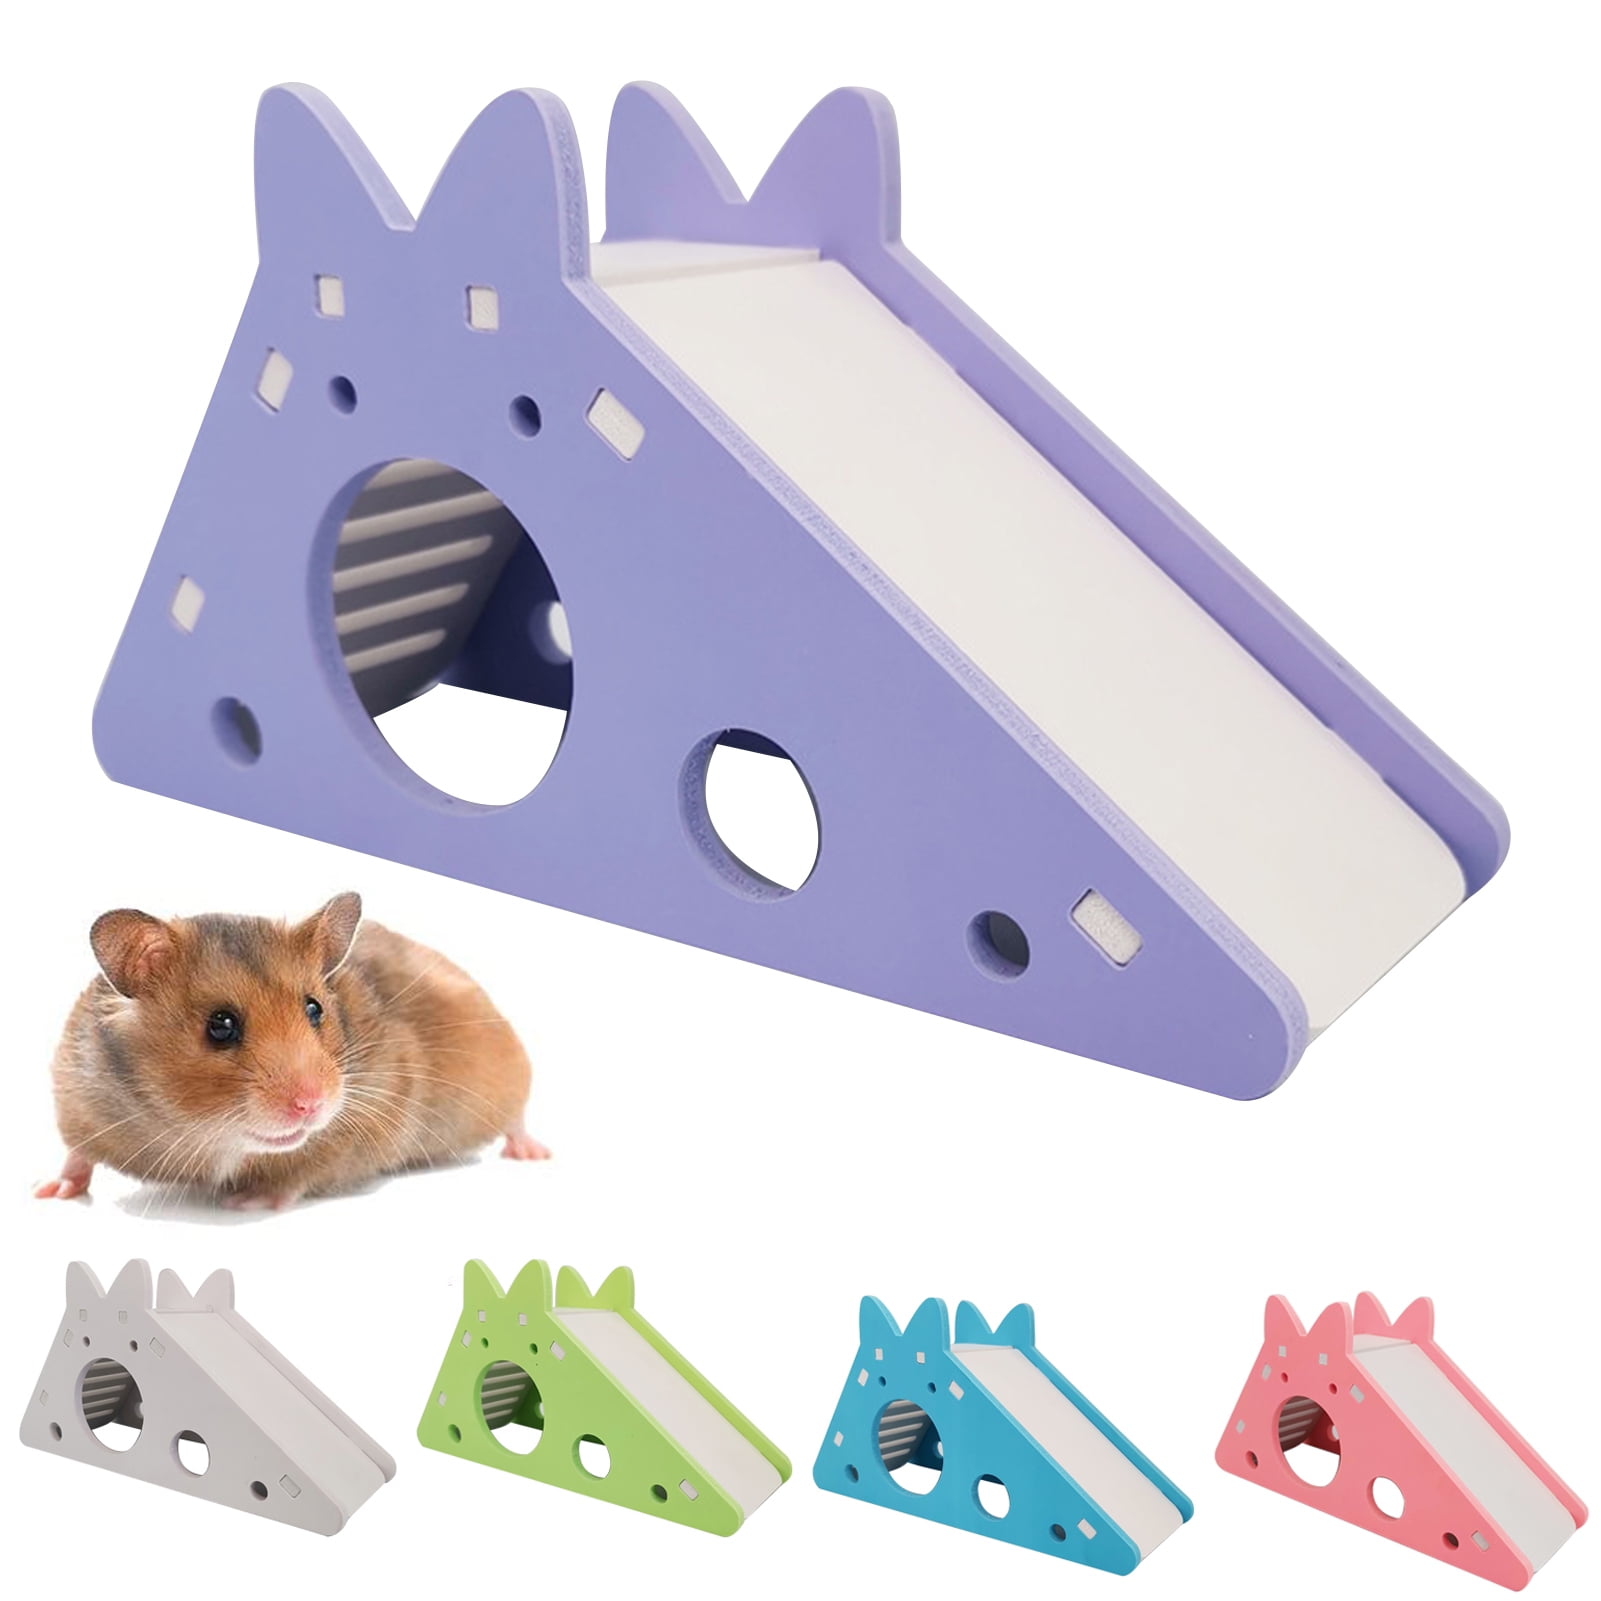 Green White Hamster Hedgehog Rainbow Arch Bridge Small Animal Play Ladder Climb Kit Toy WYKsoku Pet Toys 